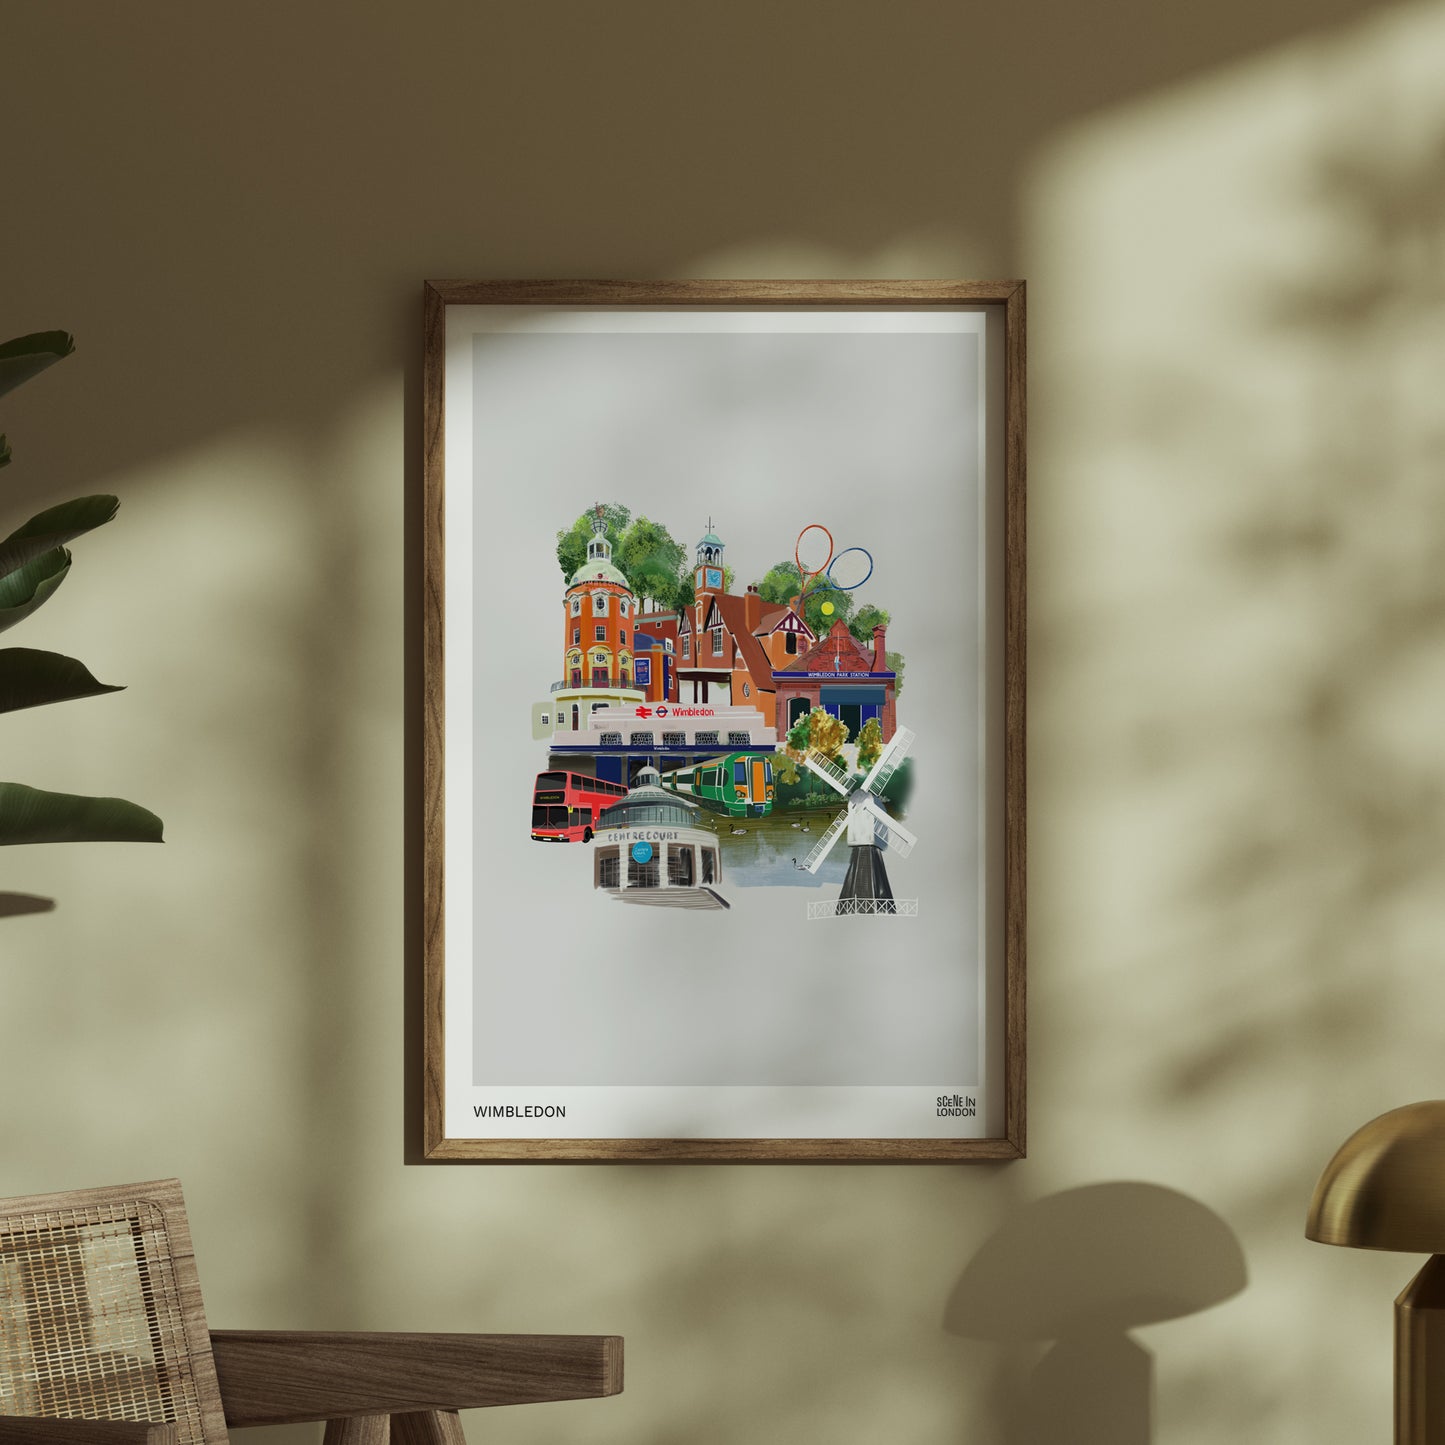 Wimbledon London art print in cosy home interior